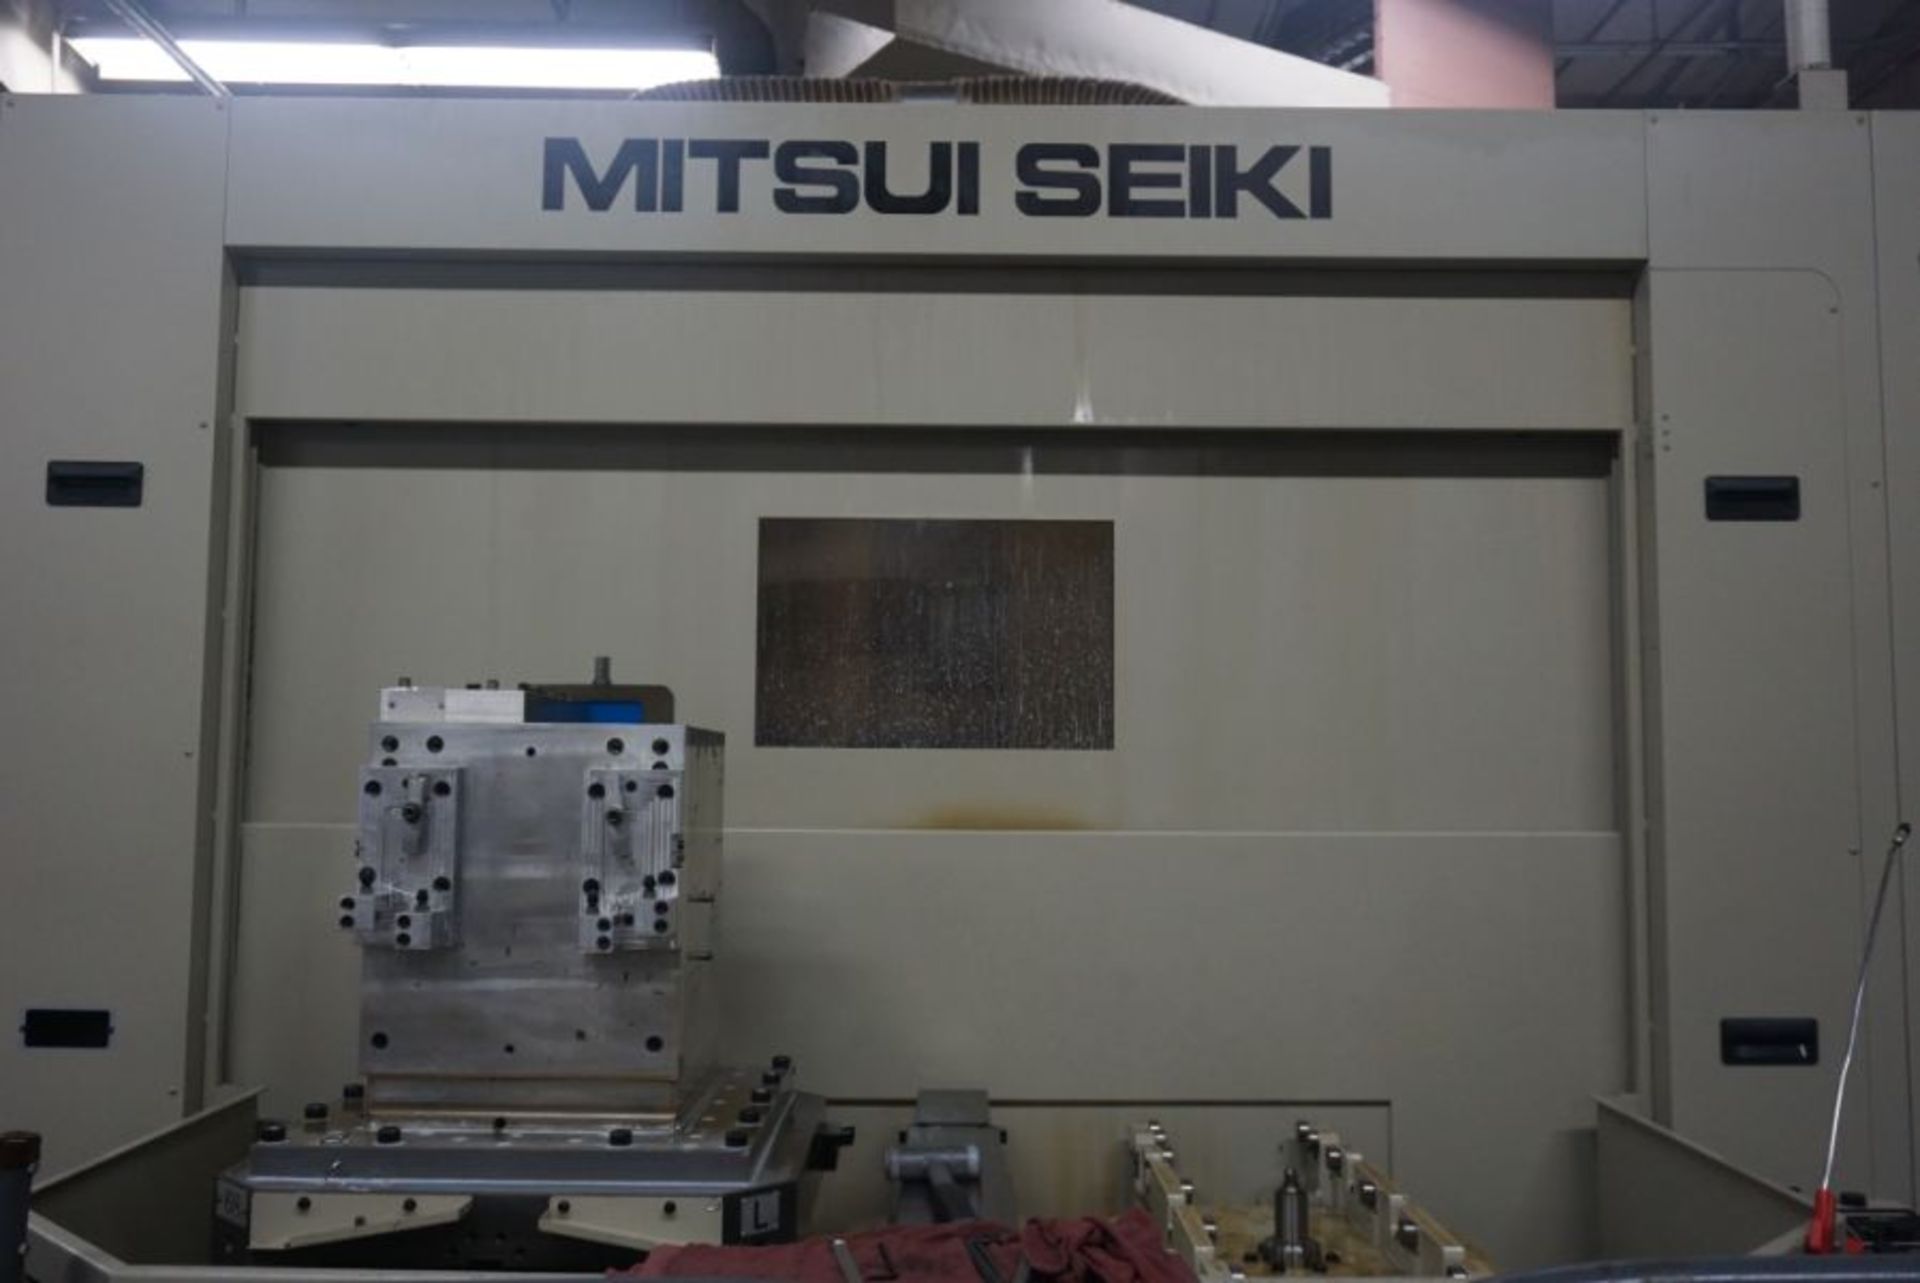 Mitsui Seiki HU63A-5X 5-Axis Horizontal Machining Center, Fanuc 30i Model A Control, New 2012 - Image 3 of 7